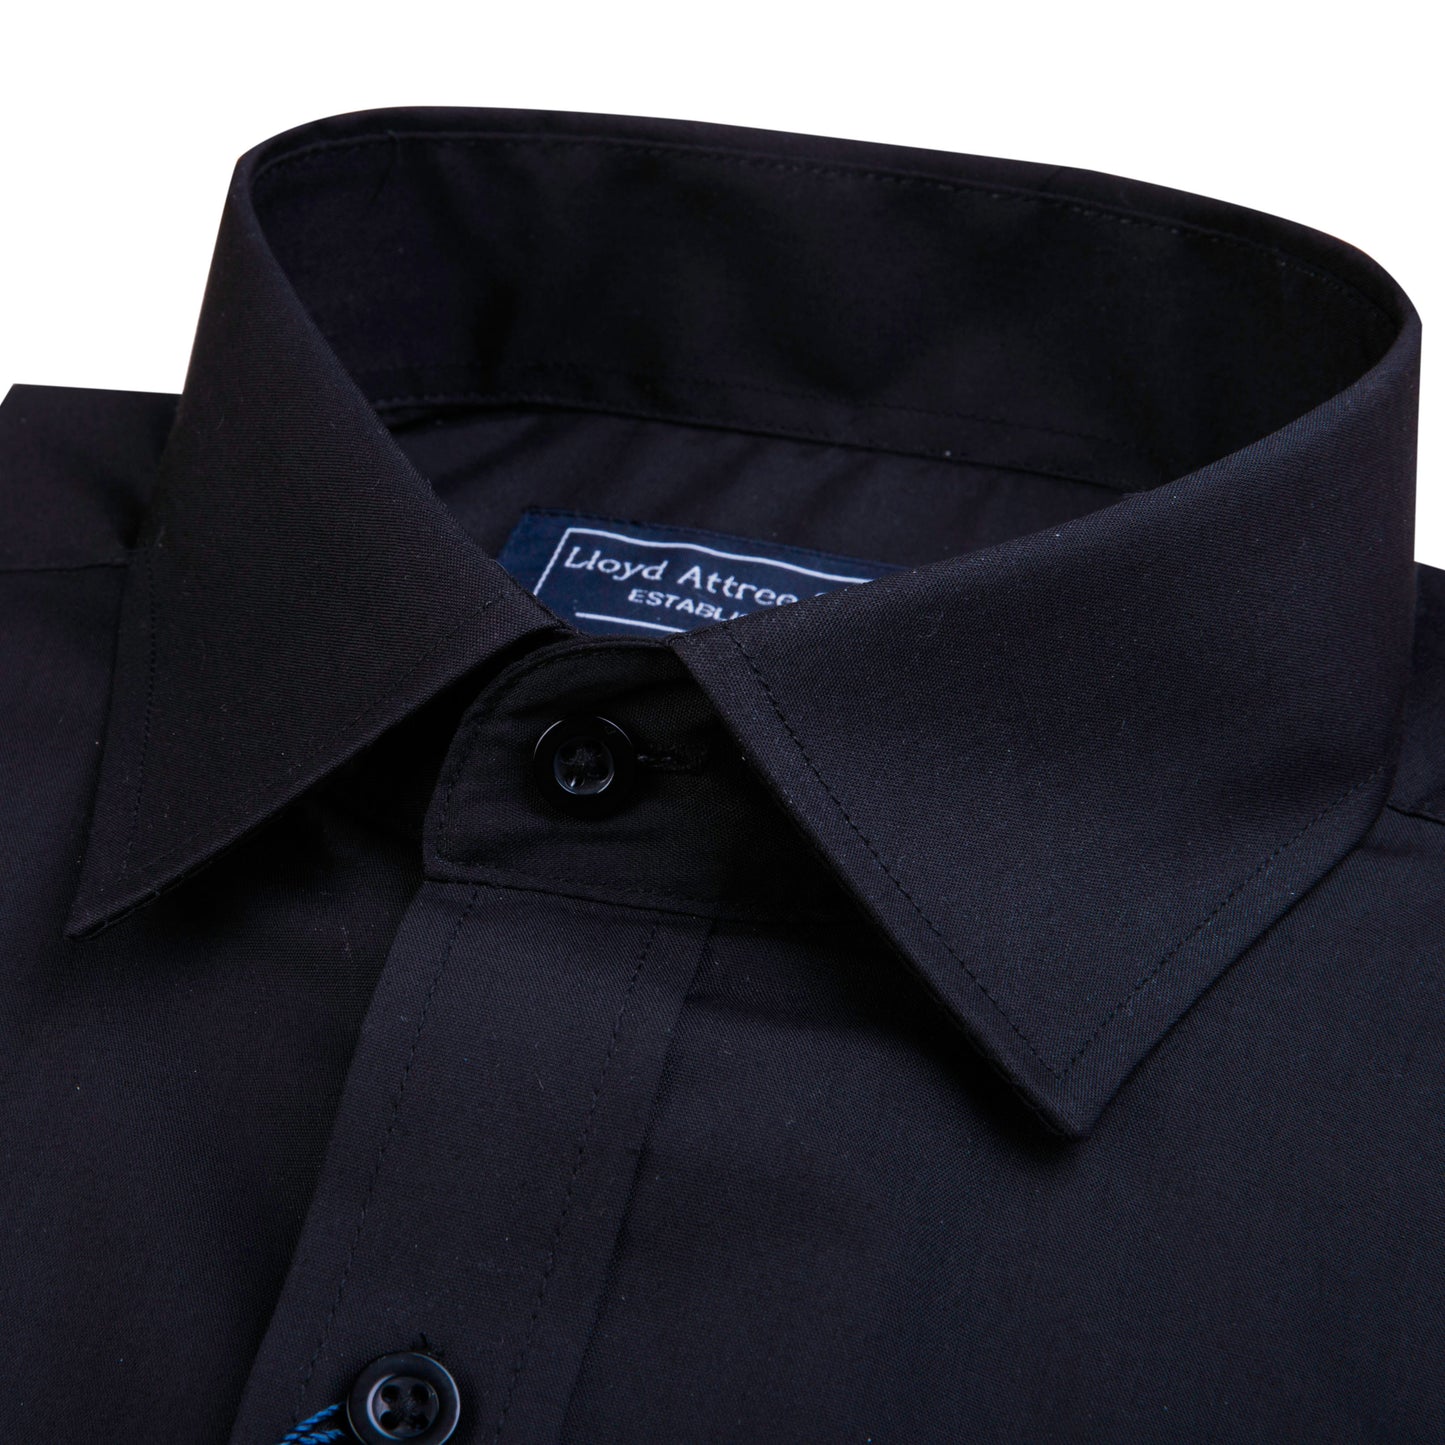 Black Short Sleeve Tailored Fit Shirt - Brand New